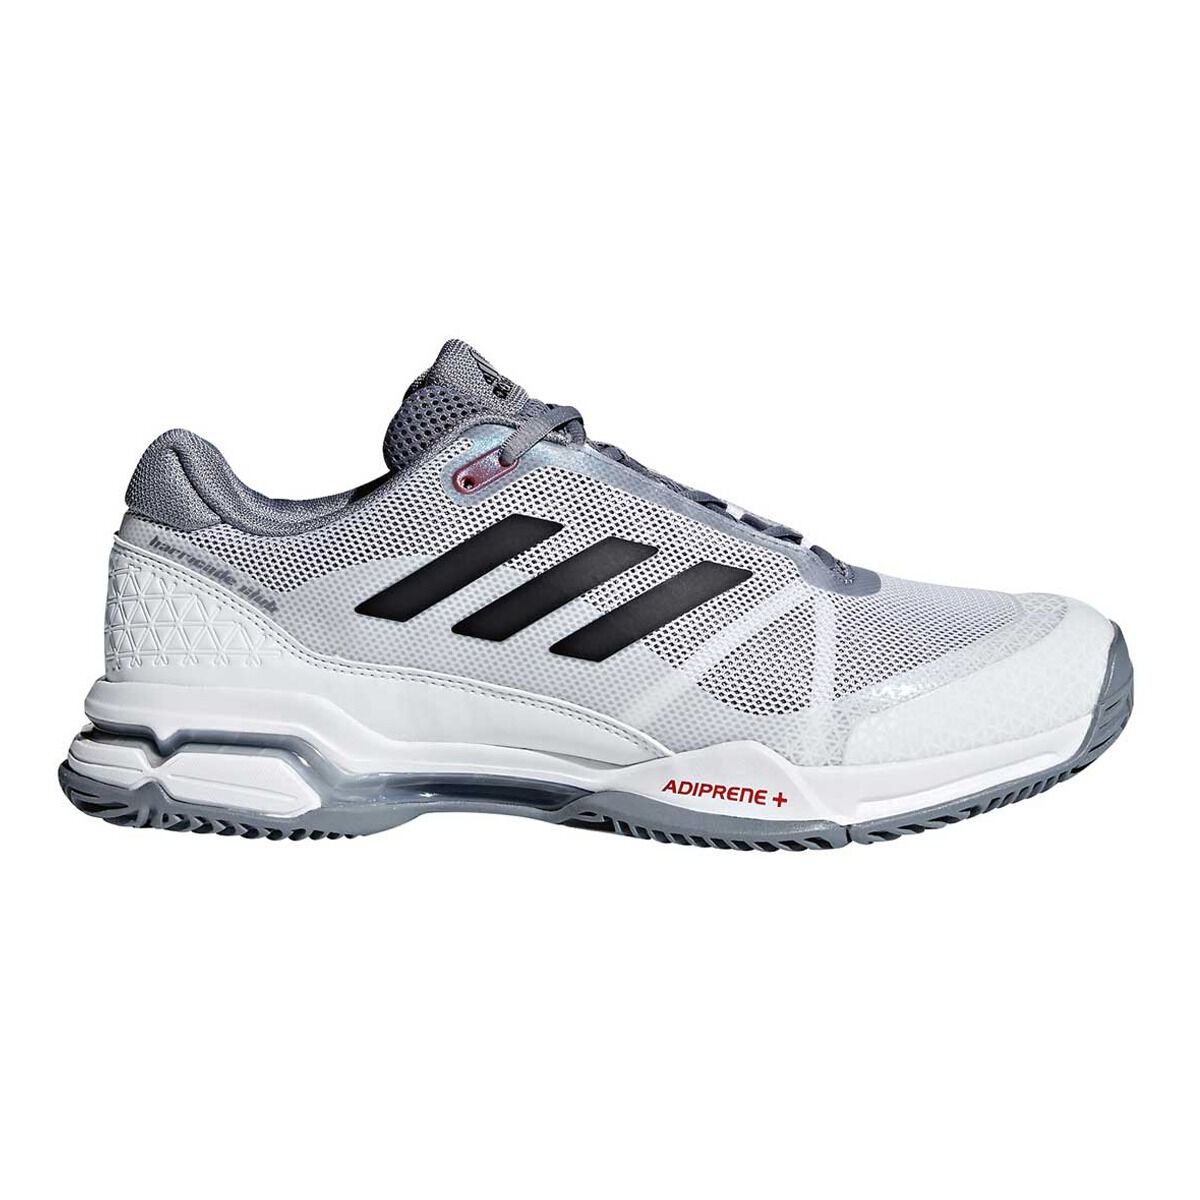 adidas adituff tennis shoes buy clothes 